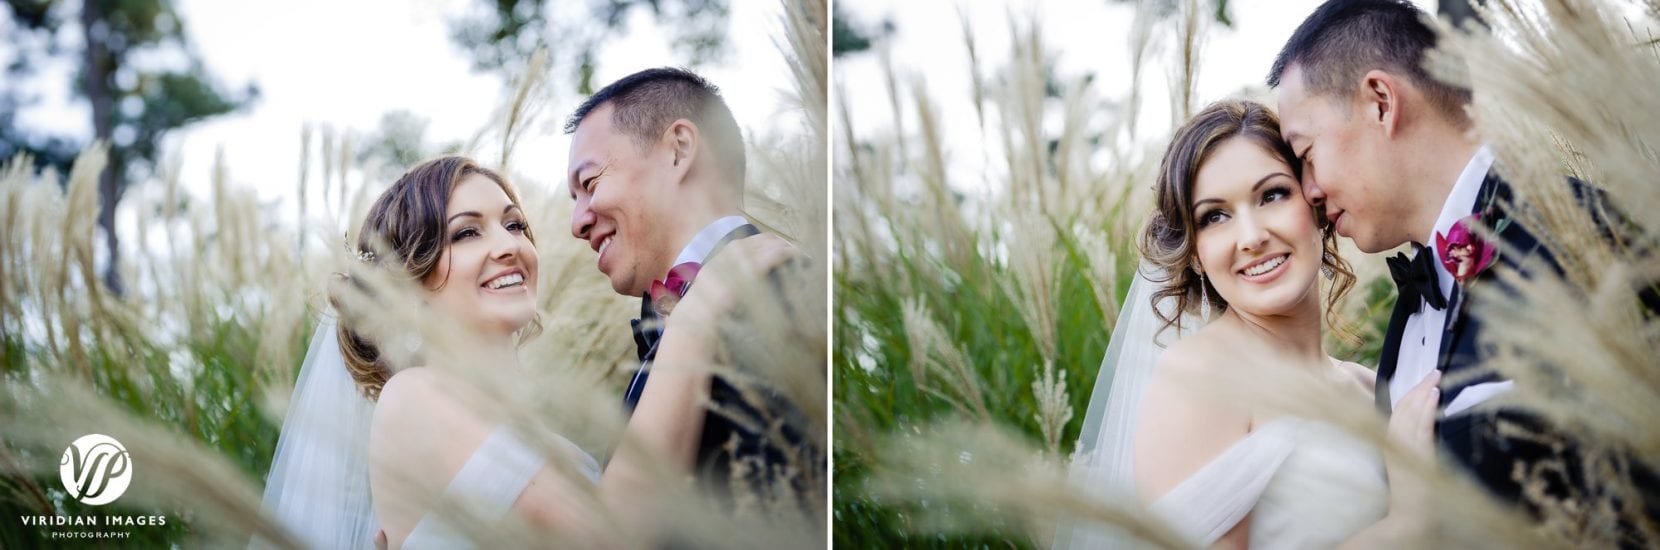 wedding portraits tall grass